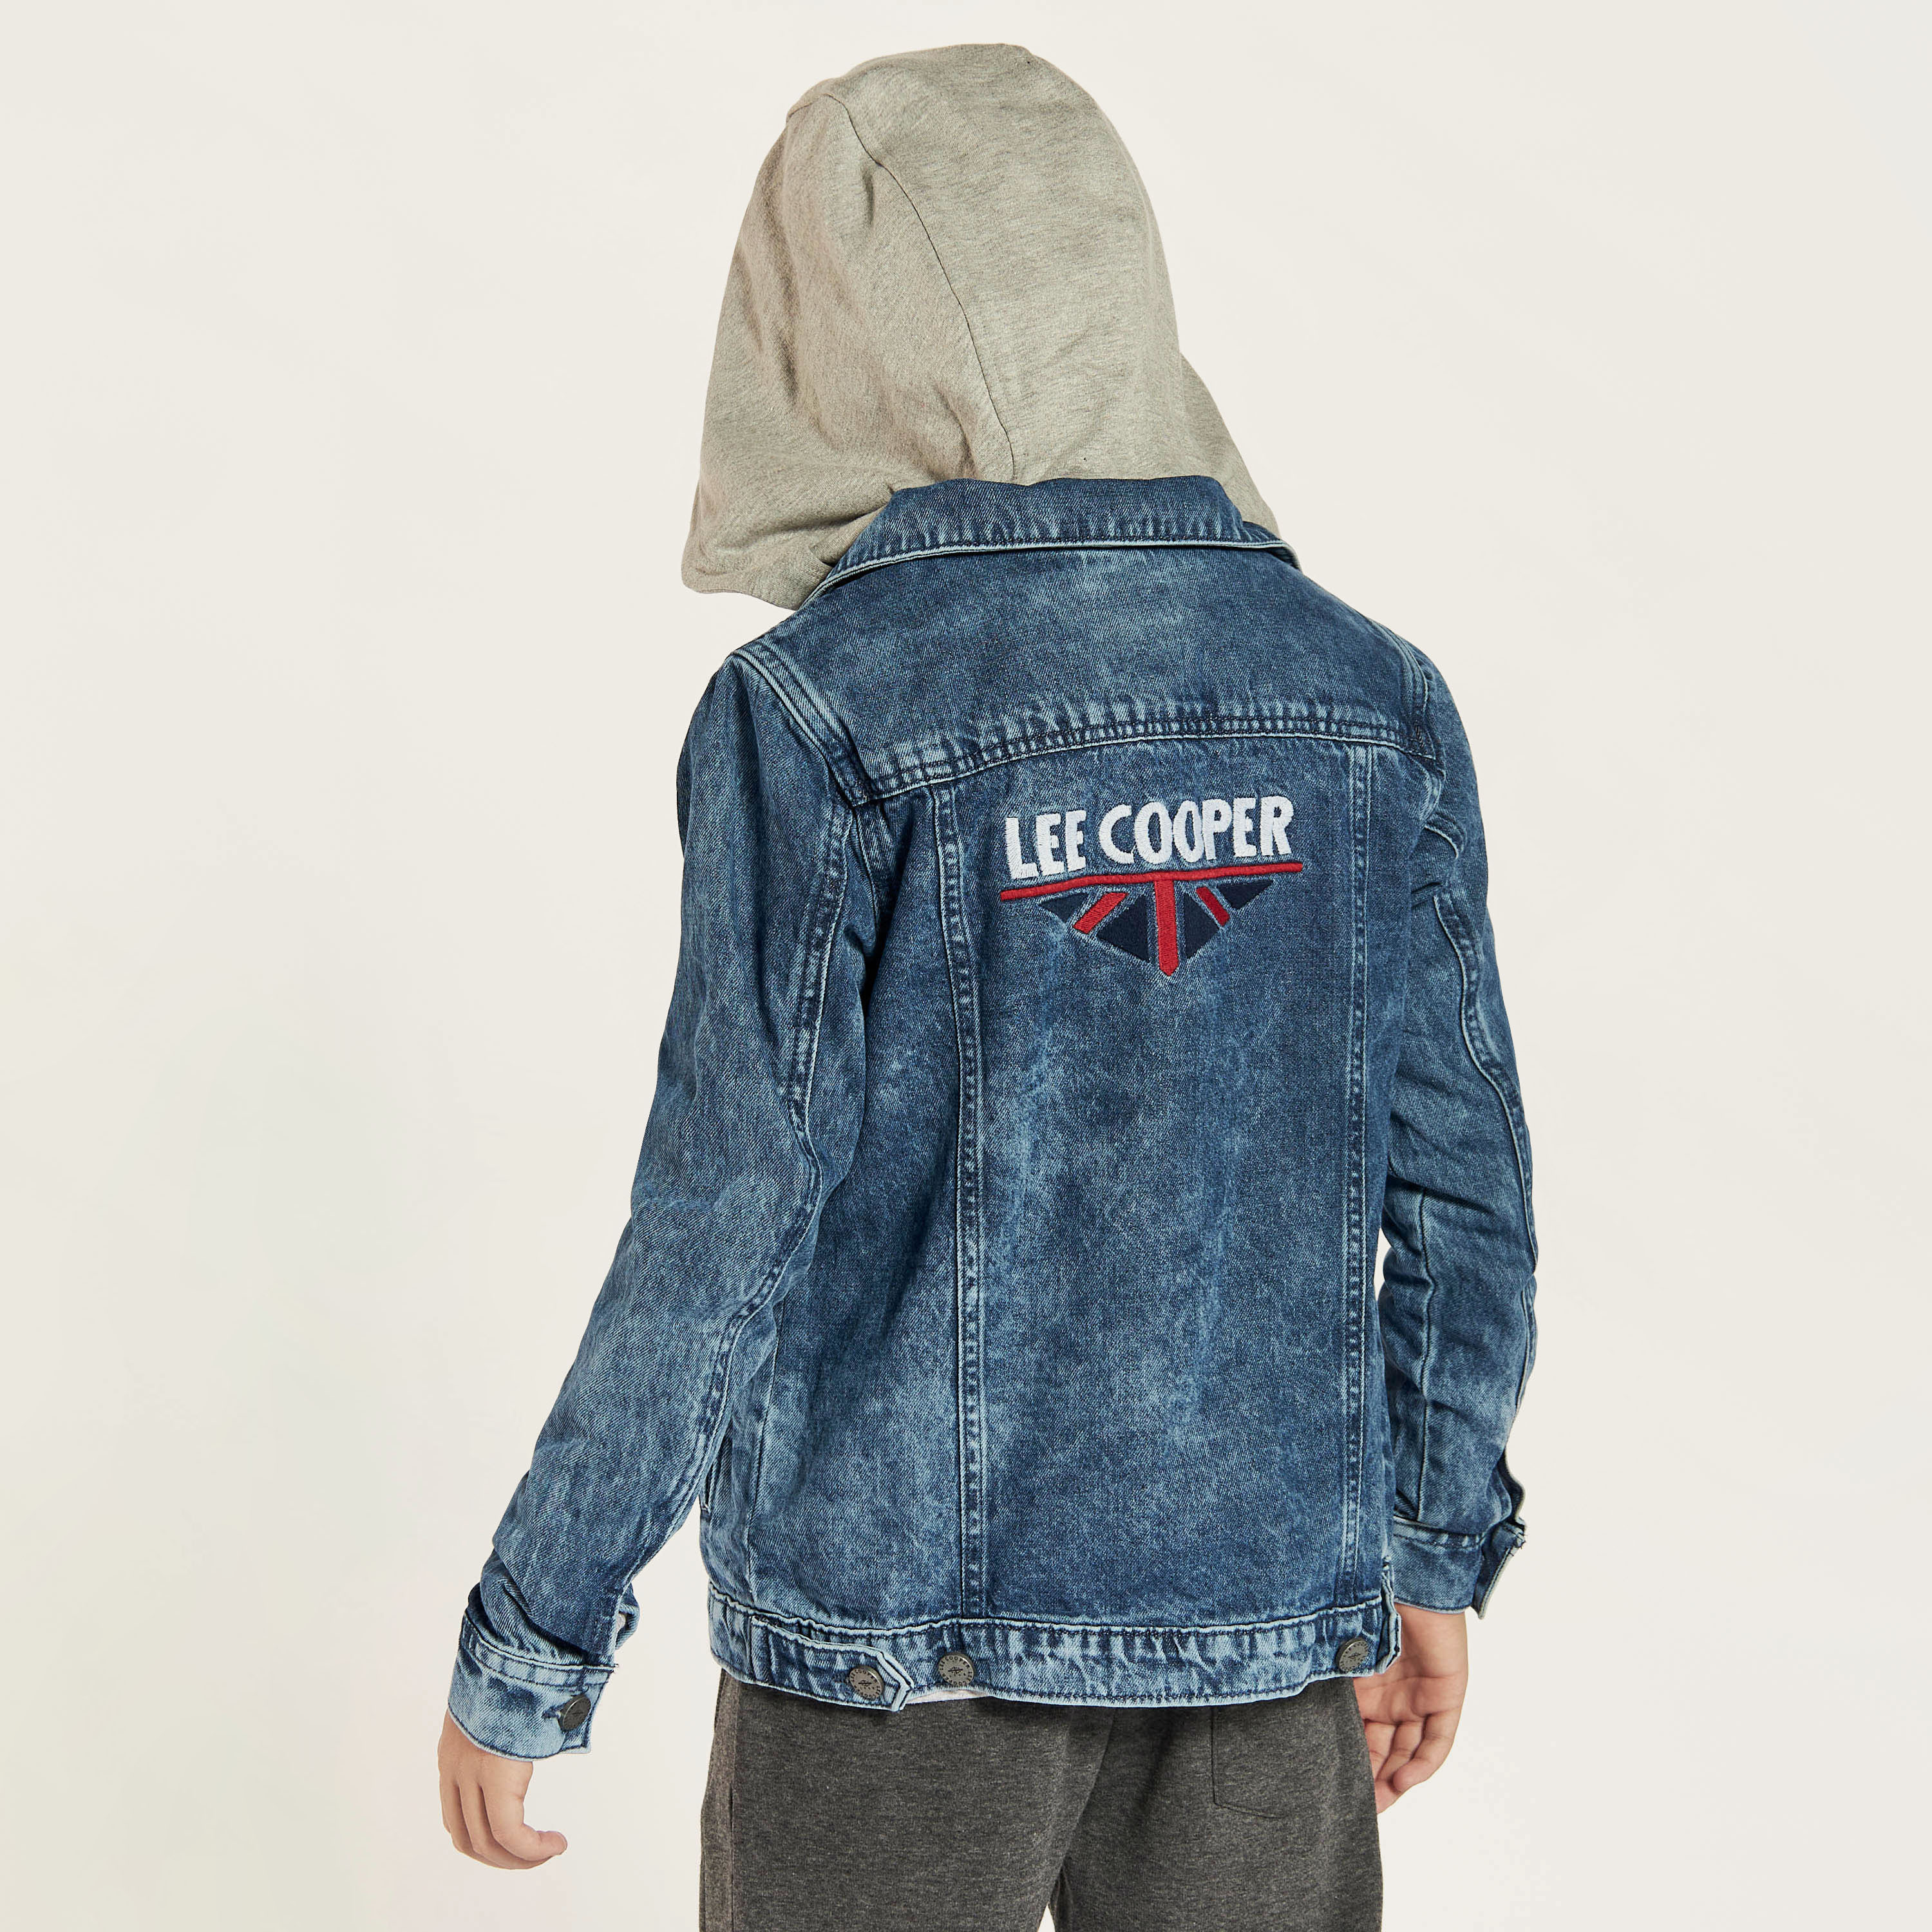 Buy Indigo Blue Jackets & Shrugs for Girls by LEE COOPER Online | Ajio.com